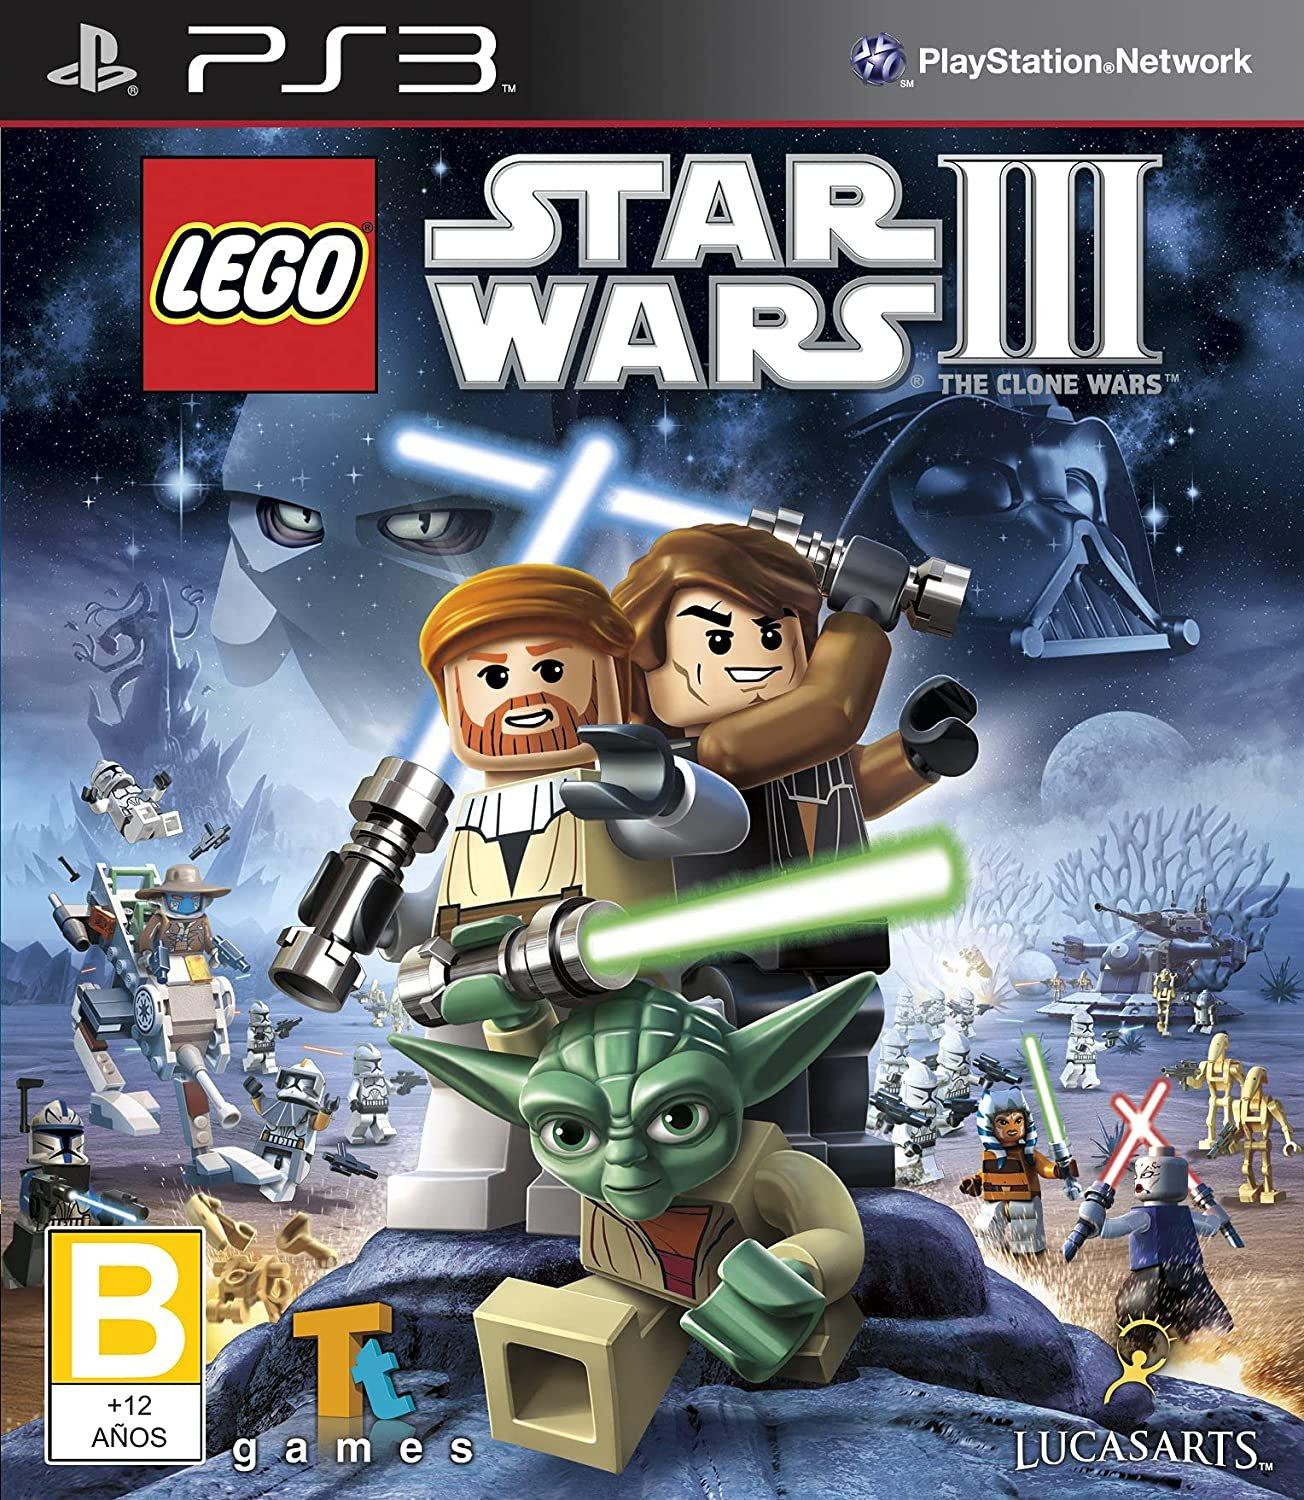 LEGO Star Wars III: The - PlayStation 3 PlayStation | GameStop